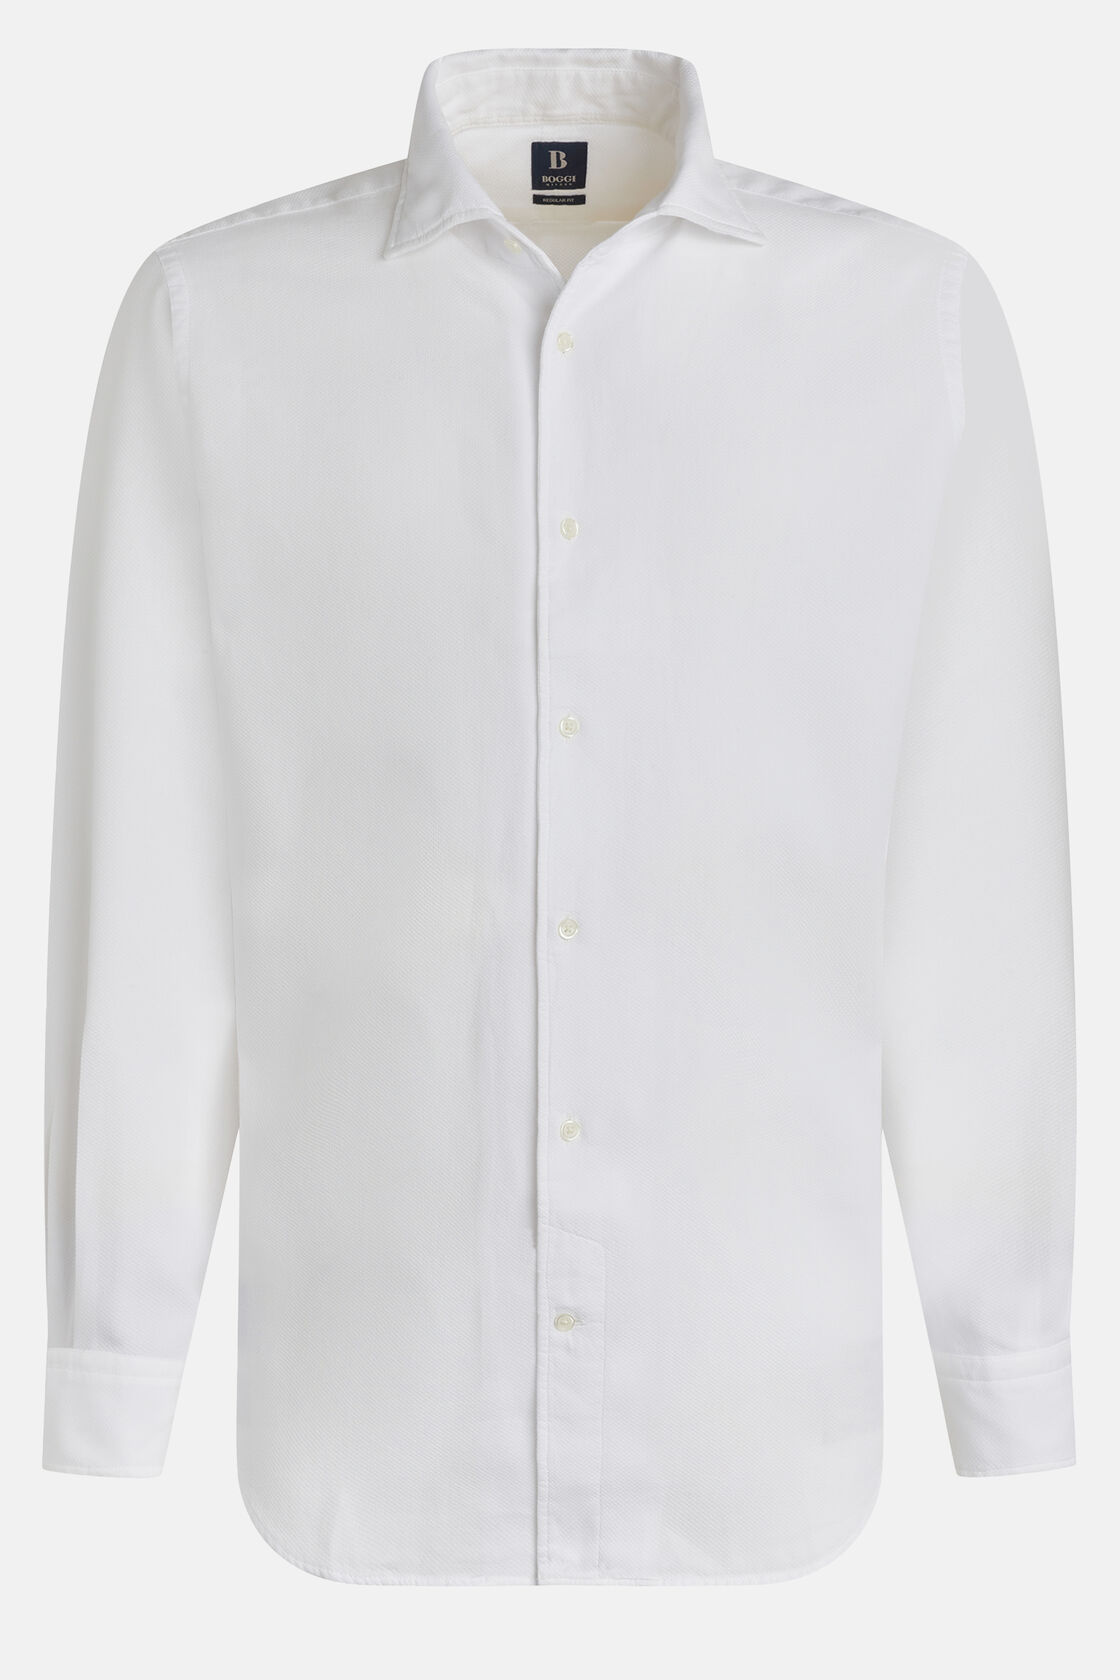 Regular Fit White Cotton Shirt, White, hi-res